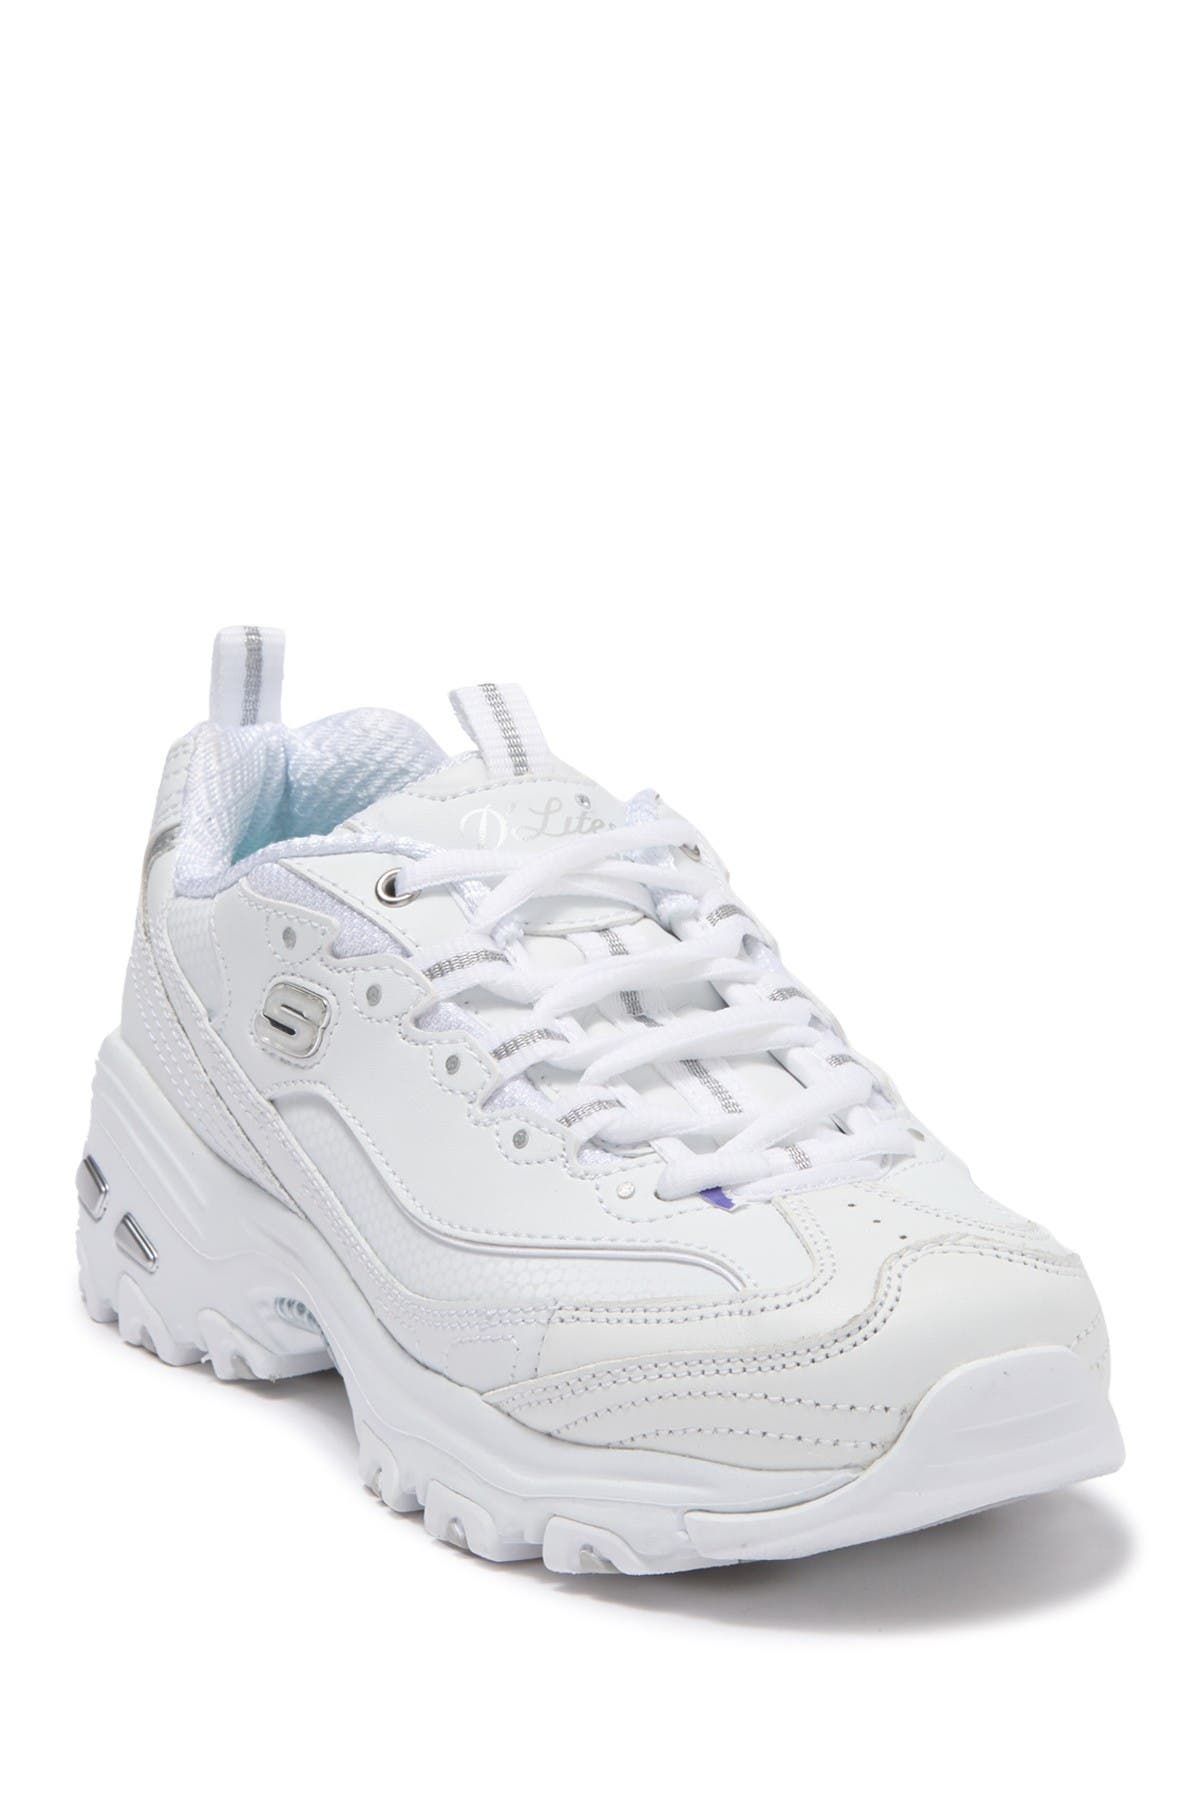 skechers chunky sneakers white